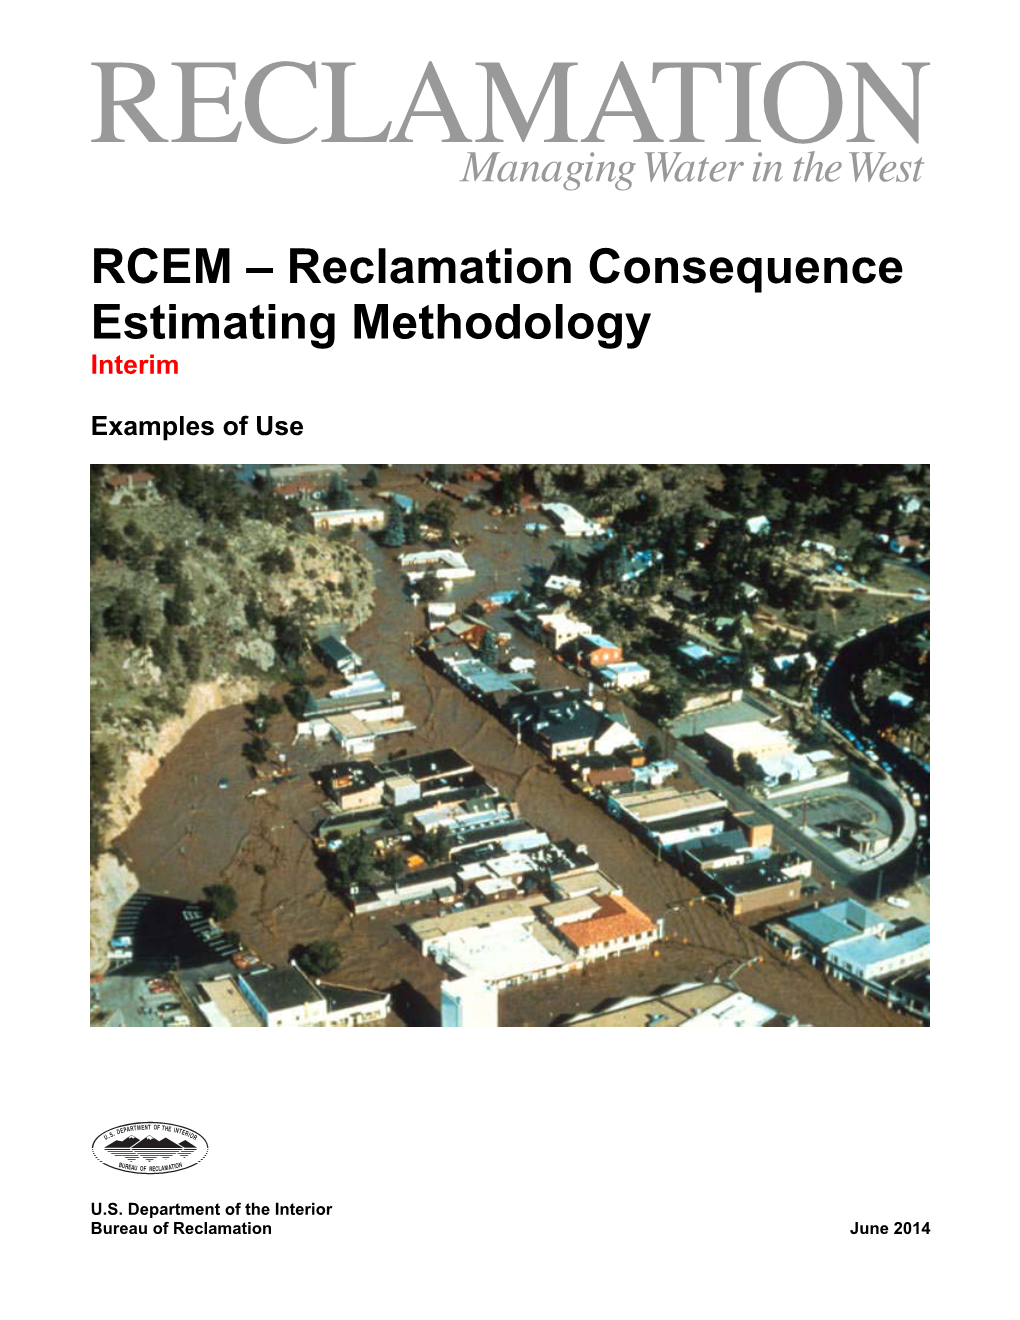 RCEM – Reclamation Consequence Estimating Methodology Interim